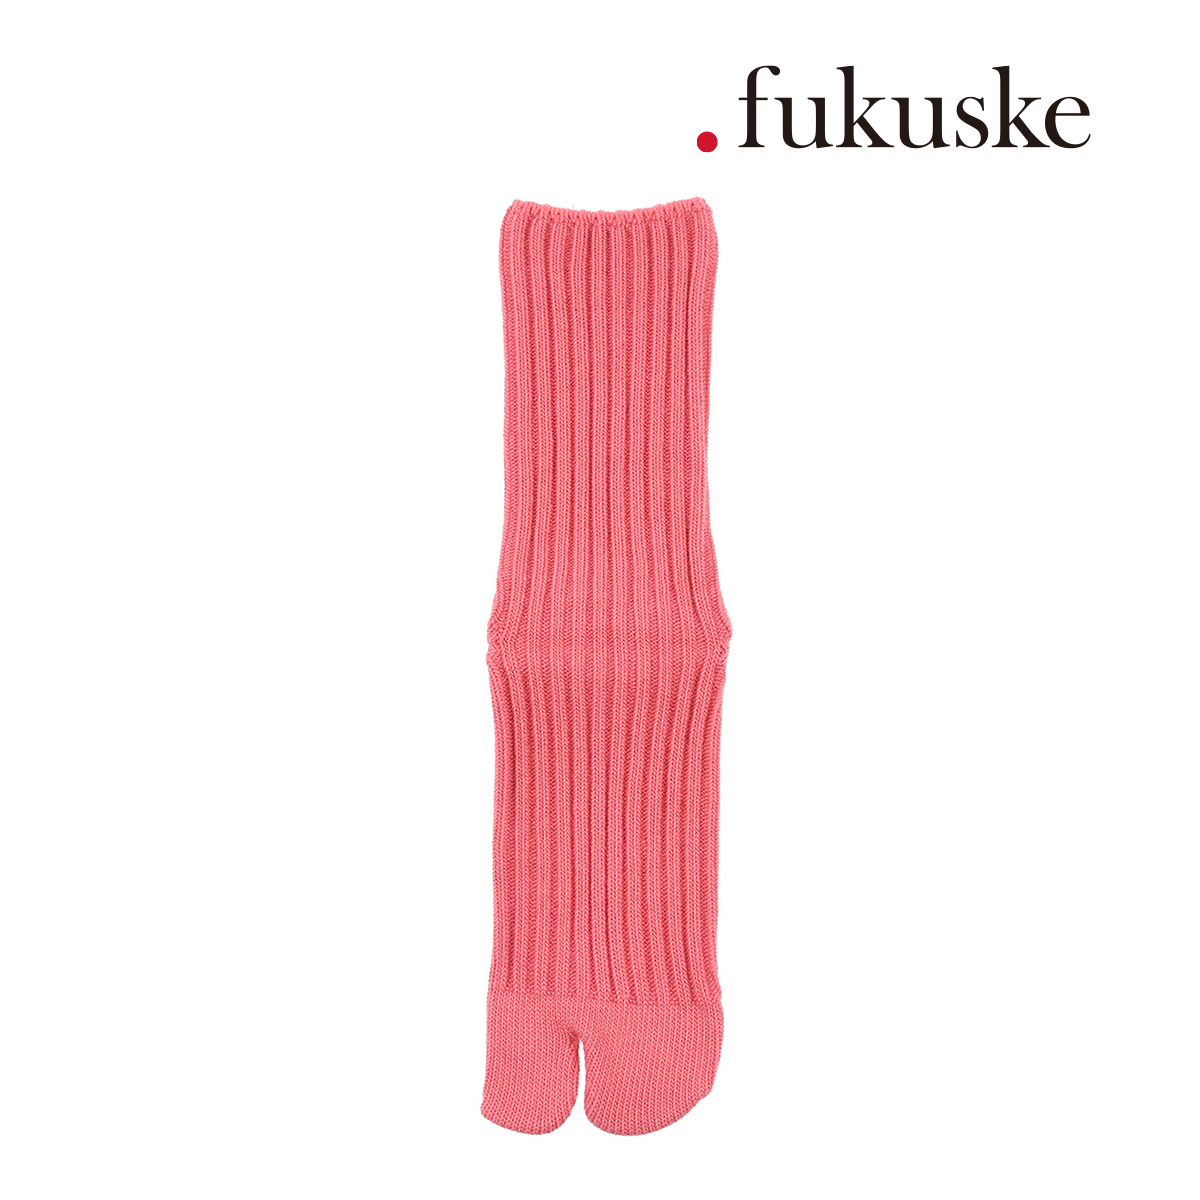 fukuske(ドット福助) ： 無地 ソックス クルー丈 足袋型 ラメ糸(3130 